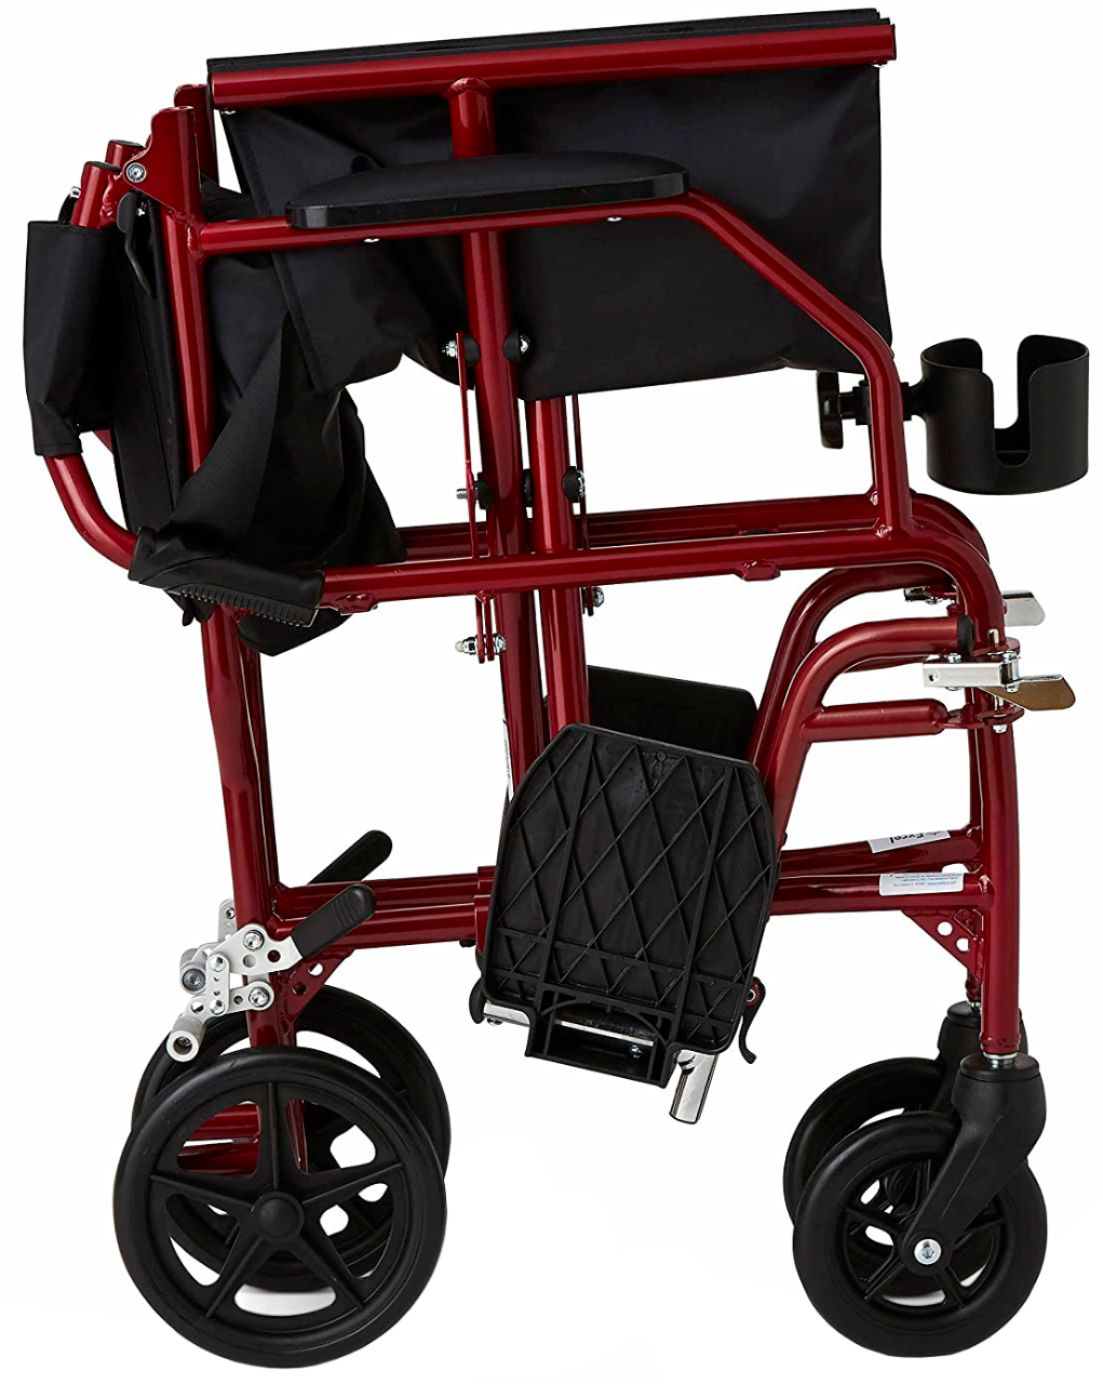 Travel Wheelchair Costco | hydrokarst-project.com